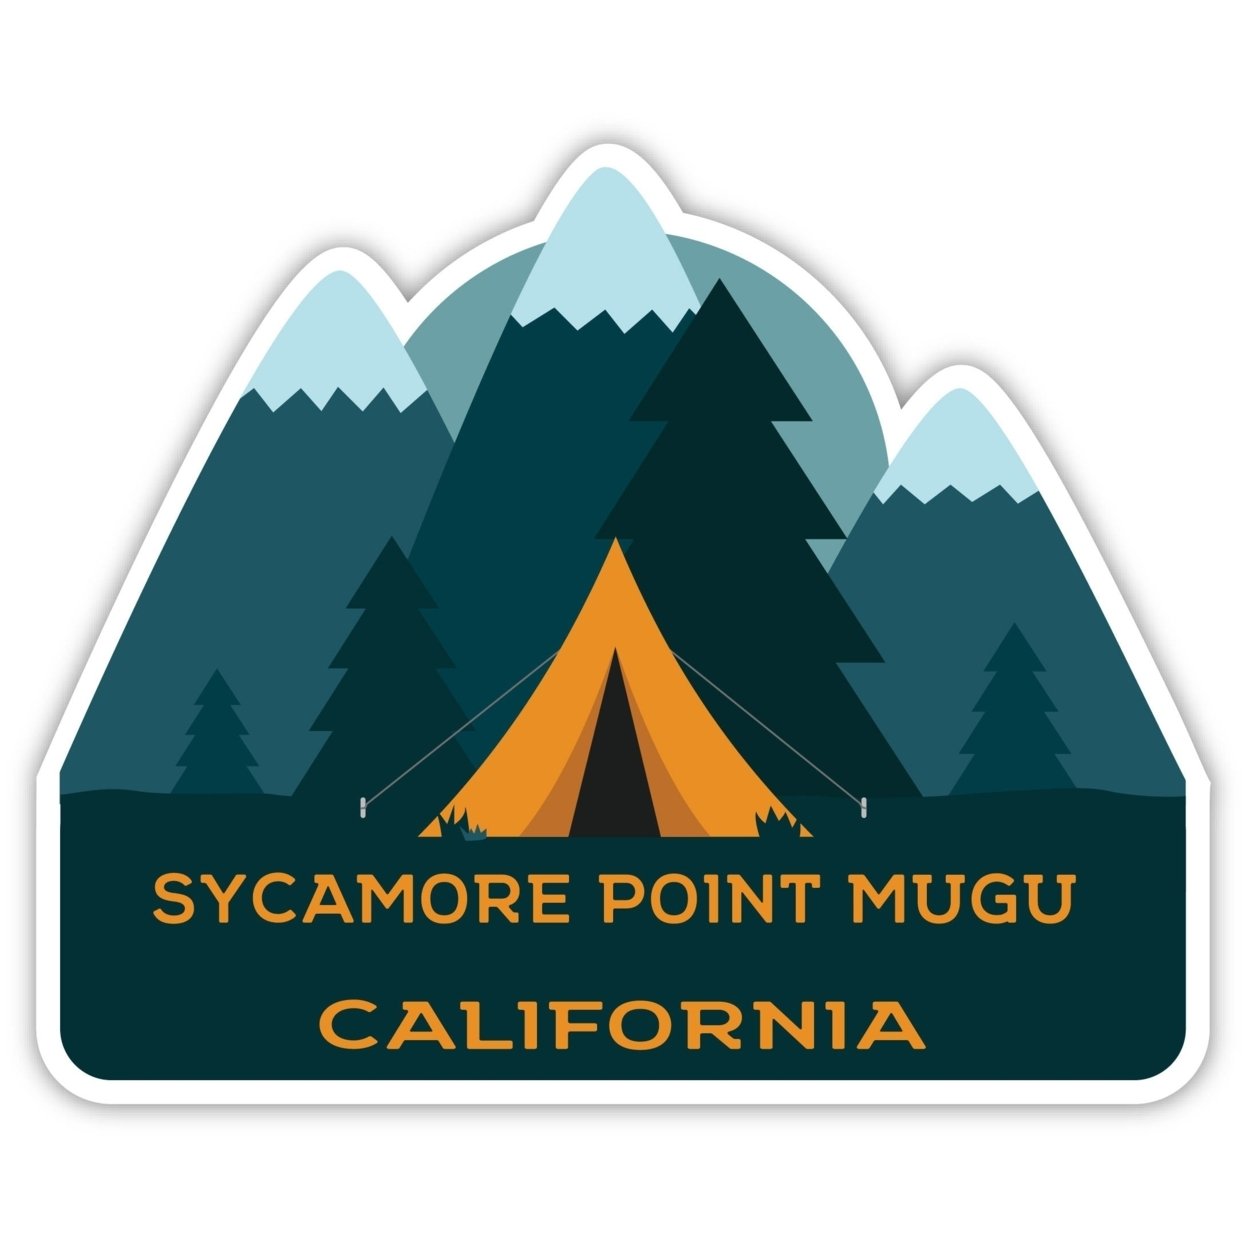 Sycamore Point Mugu California Souvenir Decorative Stickers (Choose Theme And Size) - Single Unit, 4-Inch, Adventures Awaits